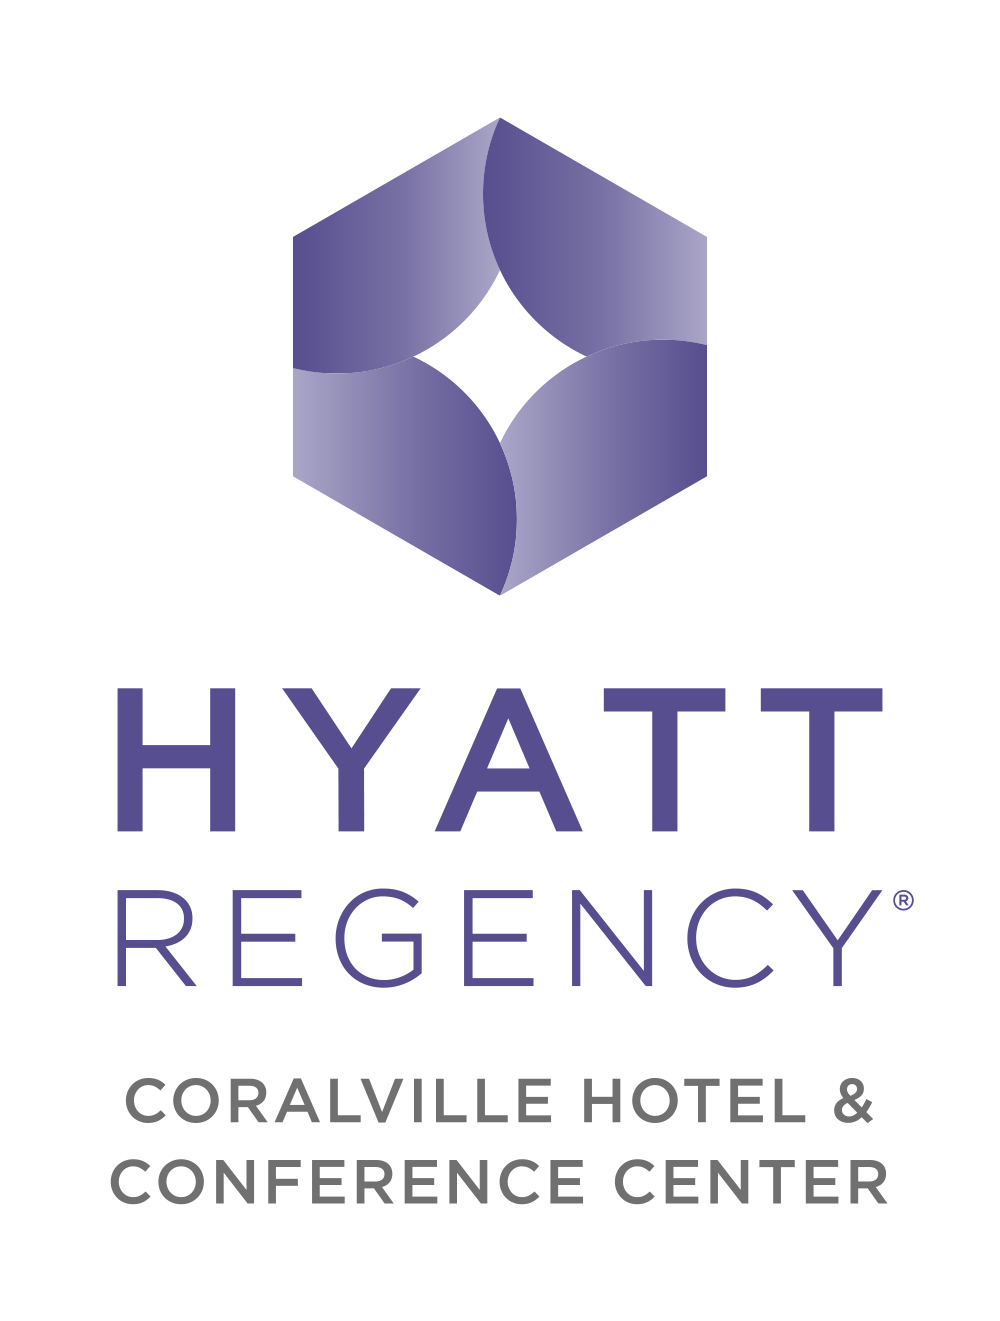 Hyatt Regency Coralville Hotel & Conference Center